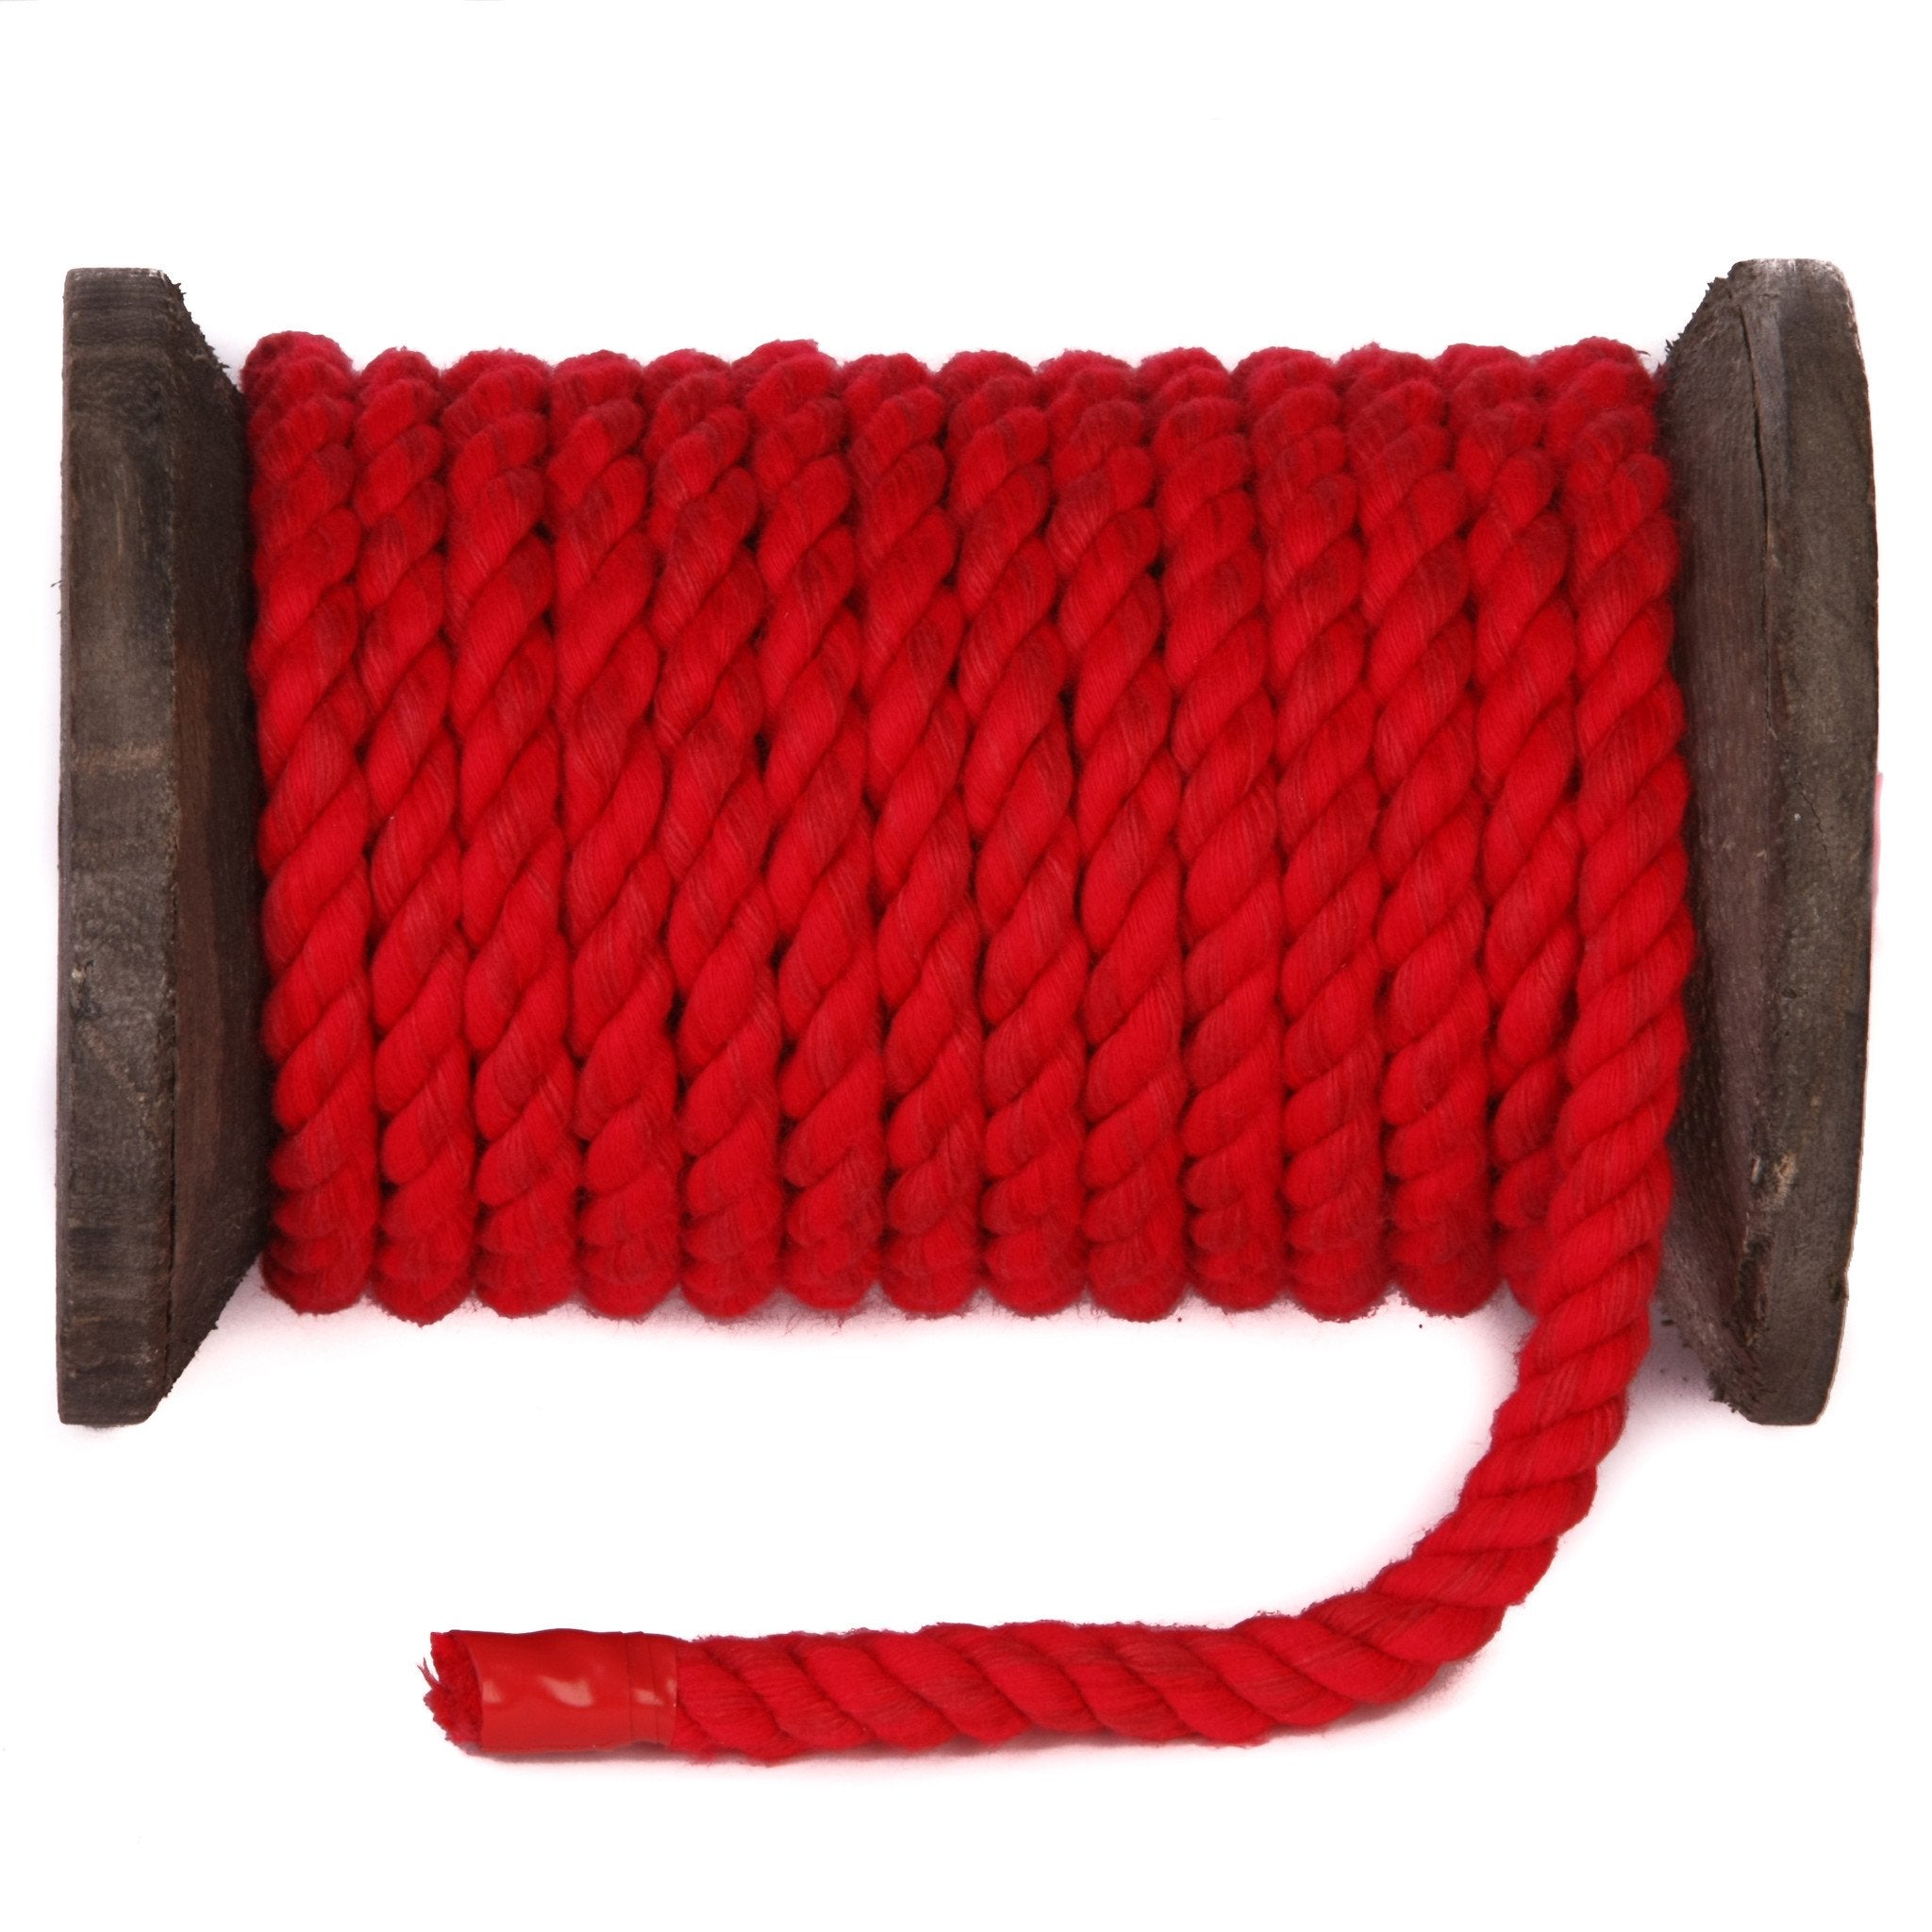 Ravenox Red Cotton Macramé Cord | Natural Cord for Macramé Projects 5 mm x 8 Yards